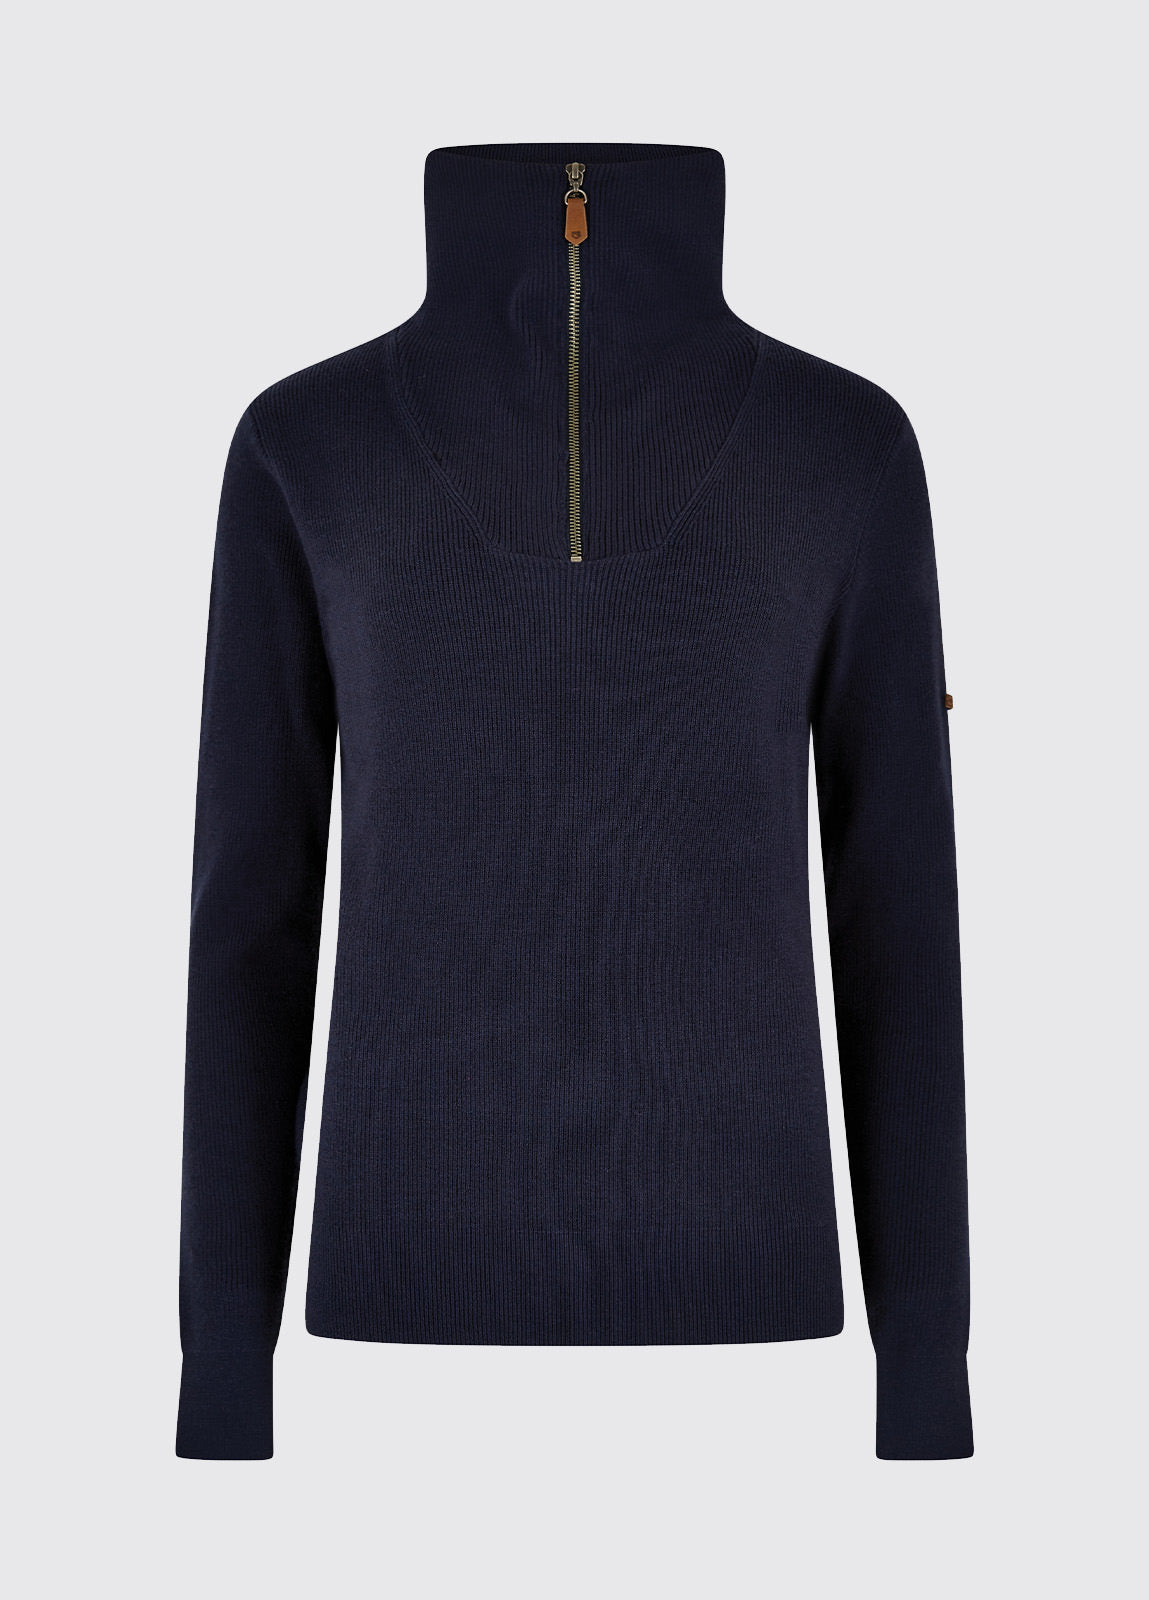 Kilbarry Sweater - Navy